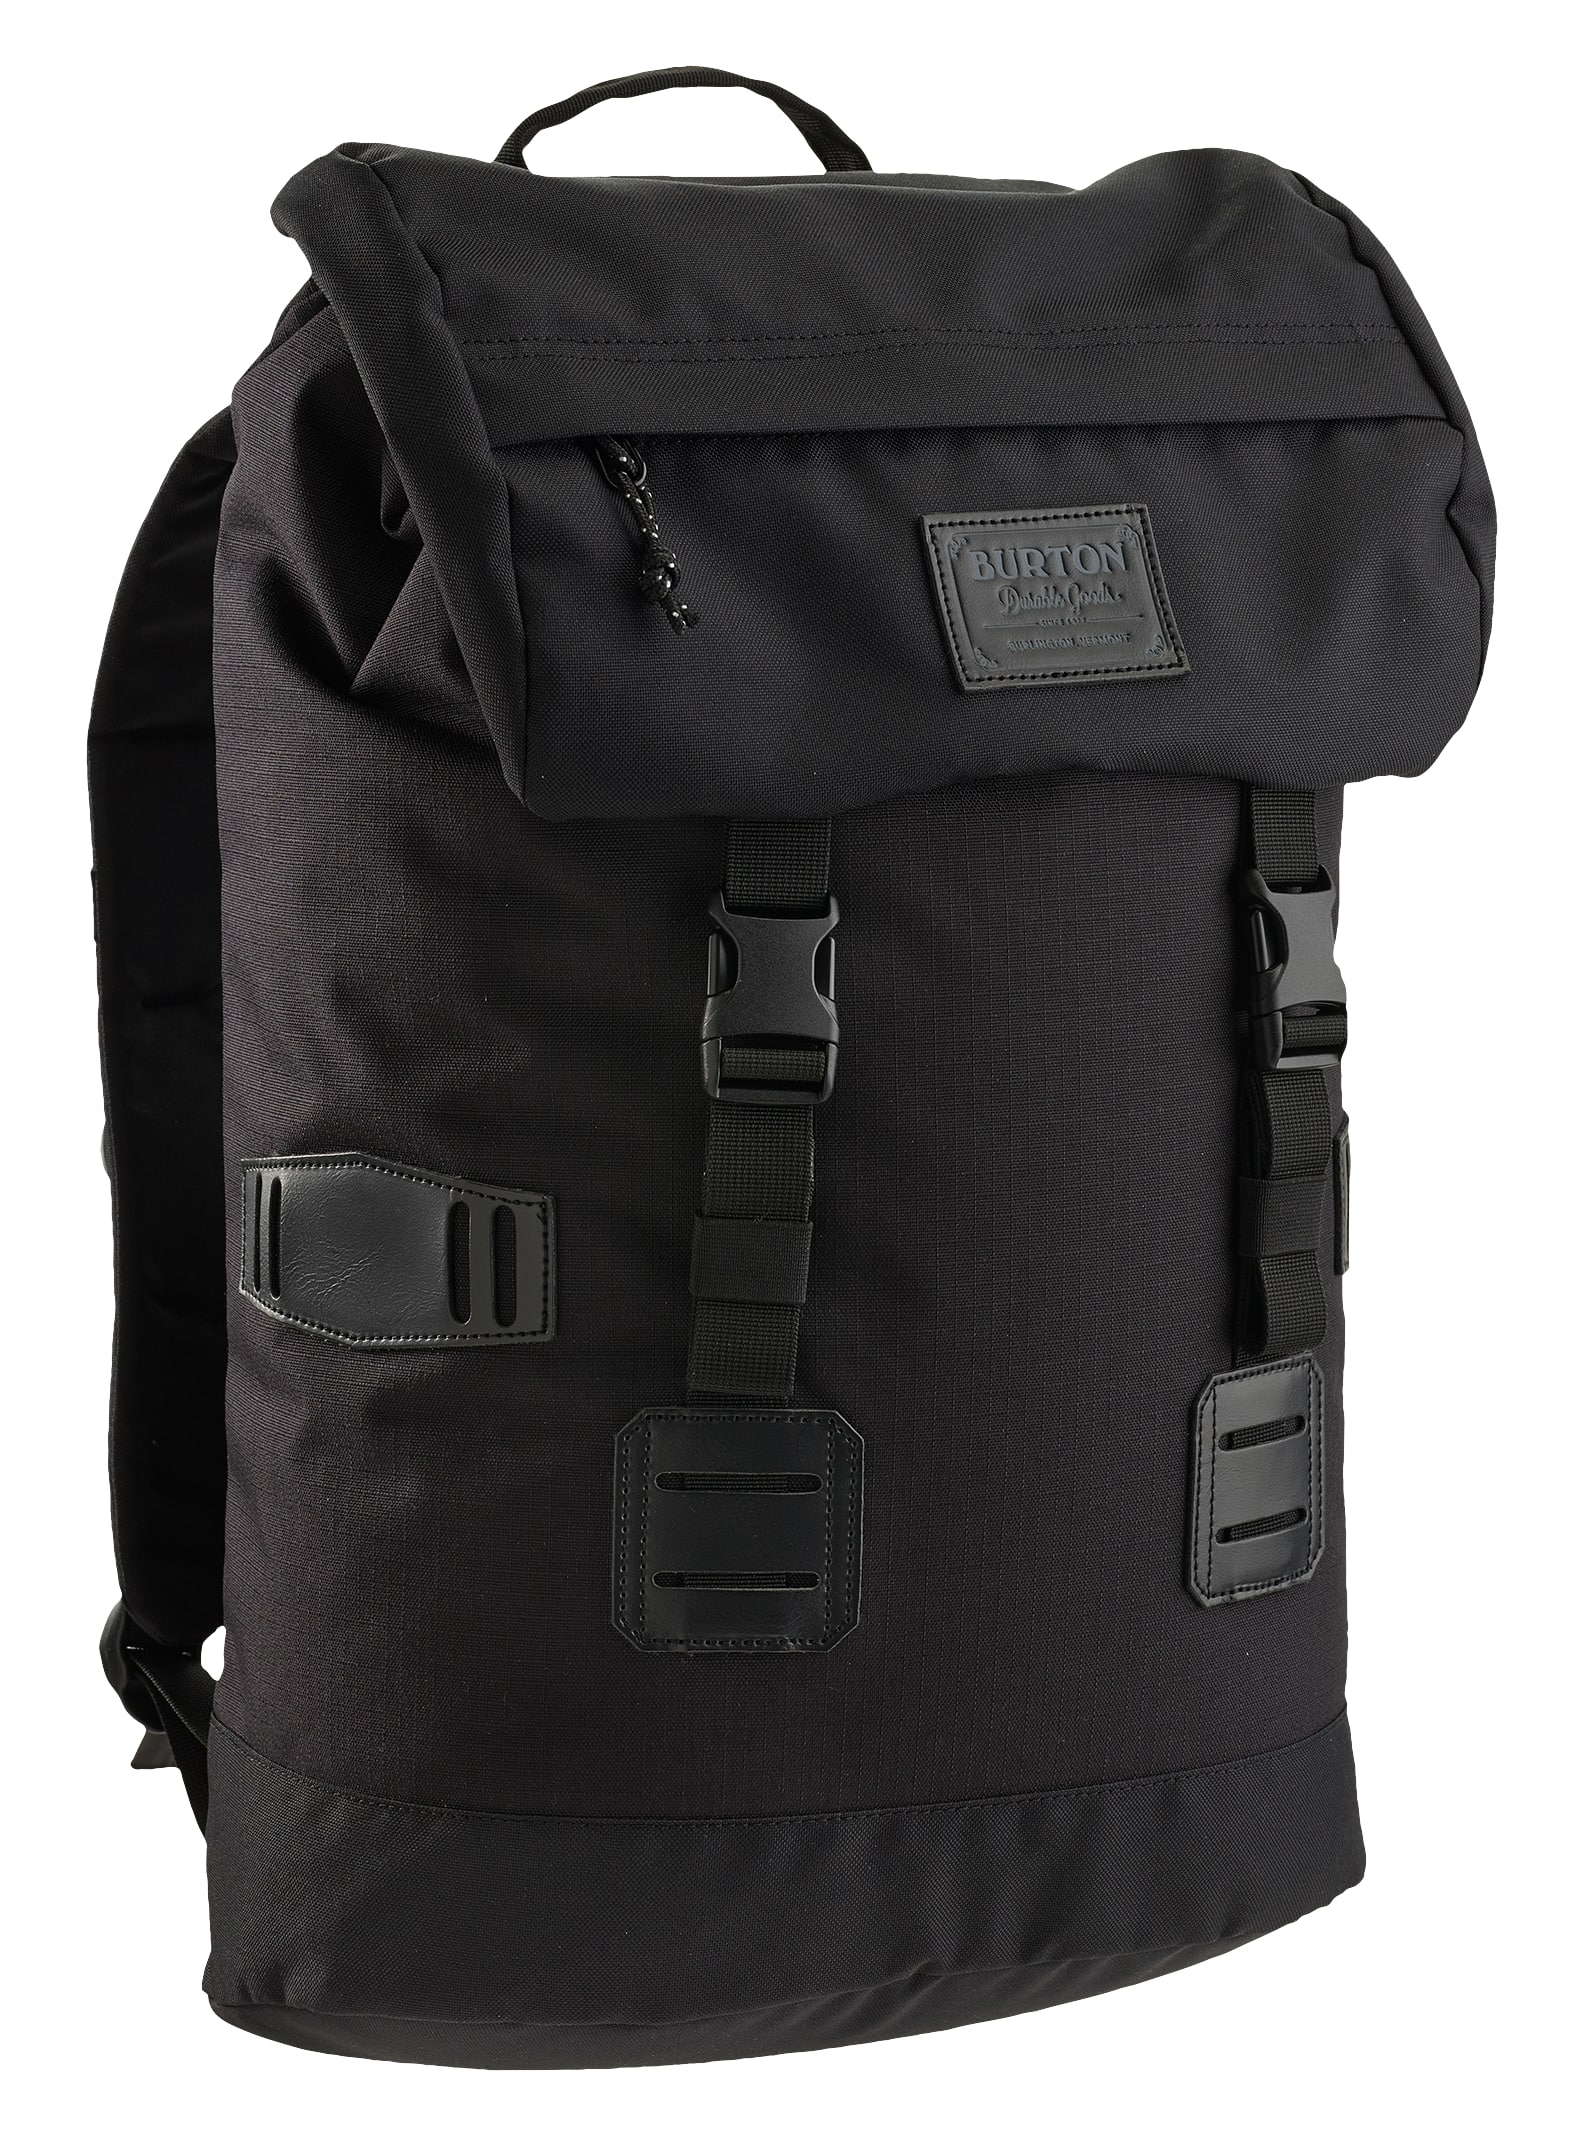 Burton Tinder 25L Backpack | Burton.com Spring / Summer 2019 US